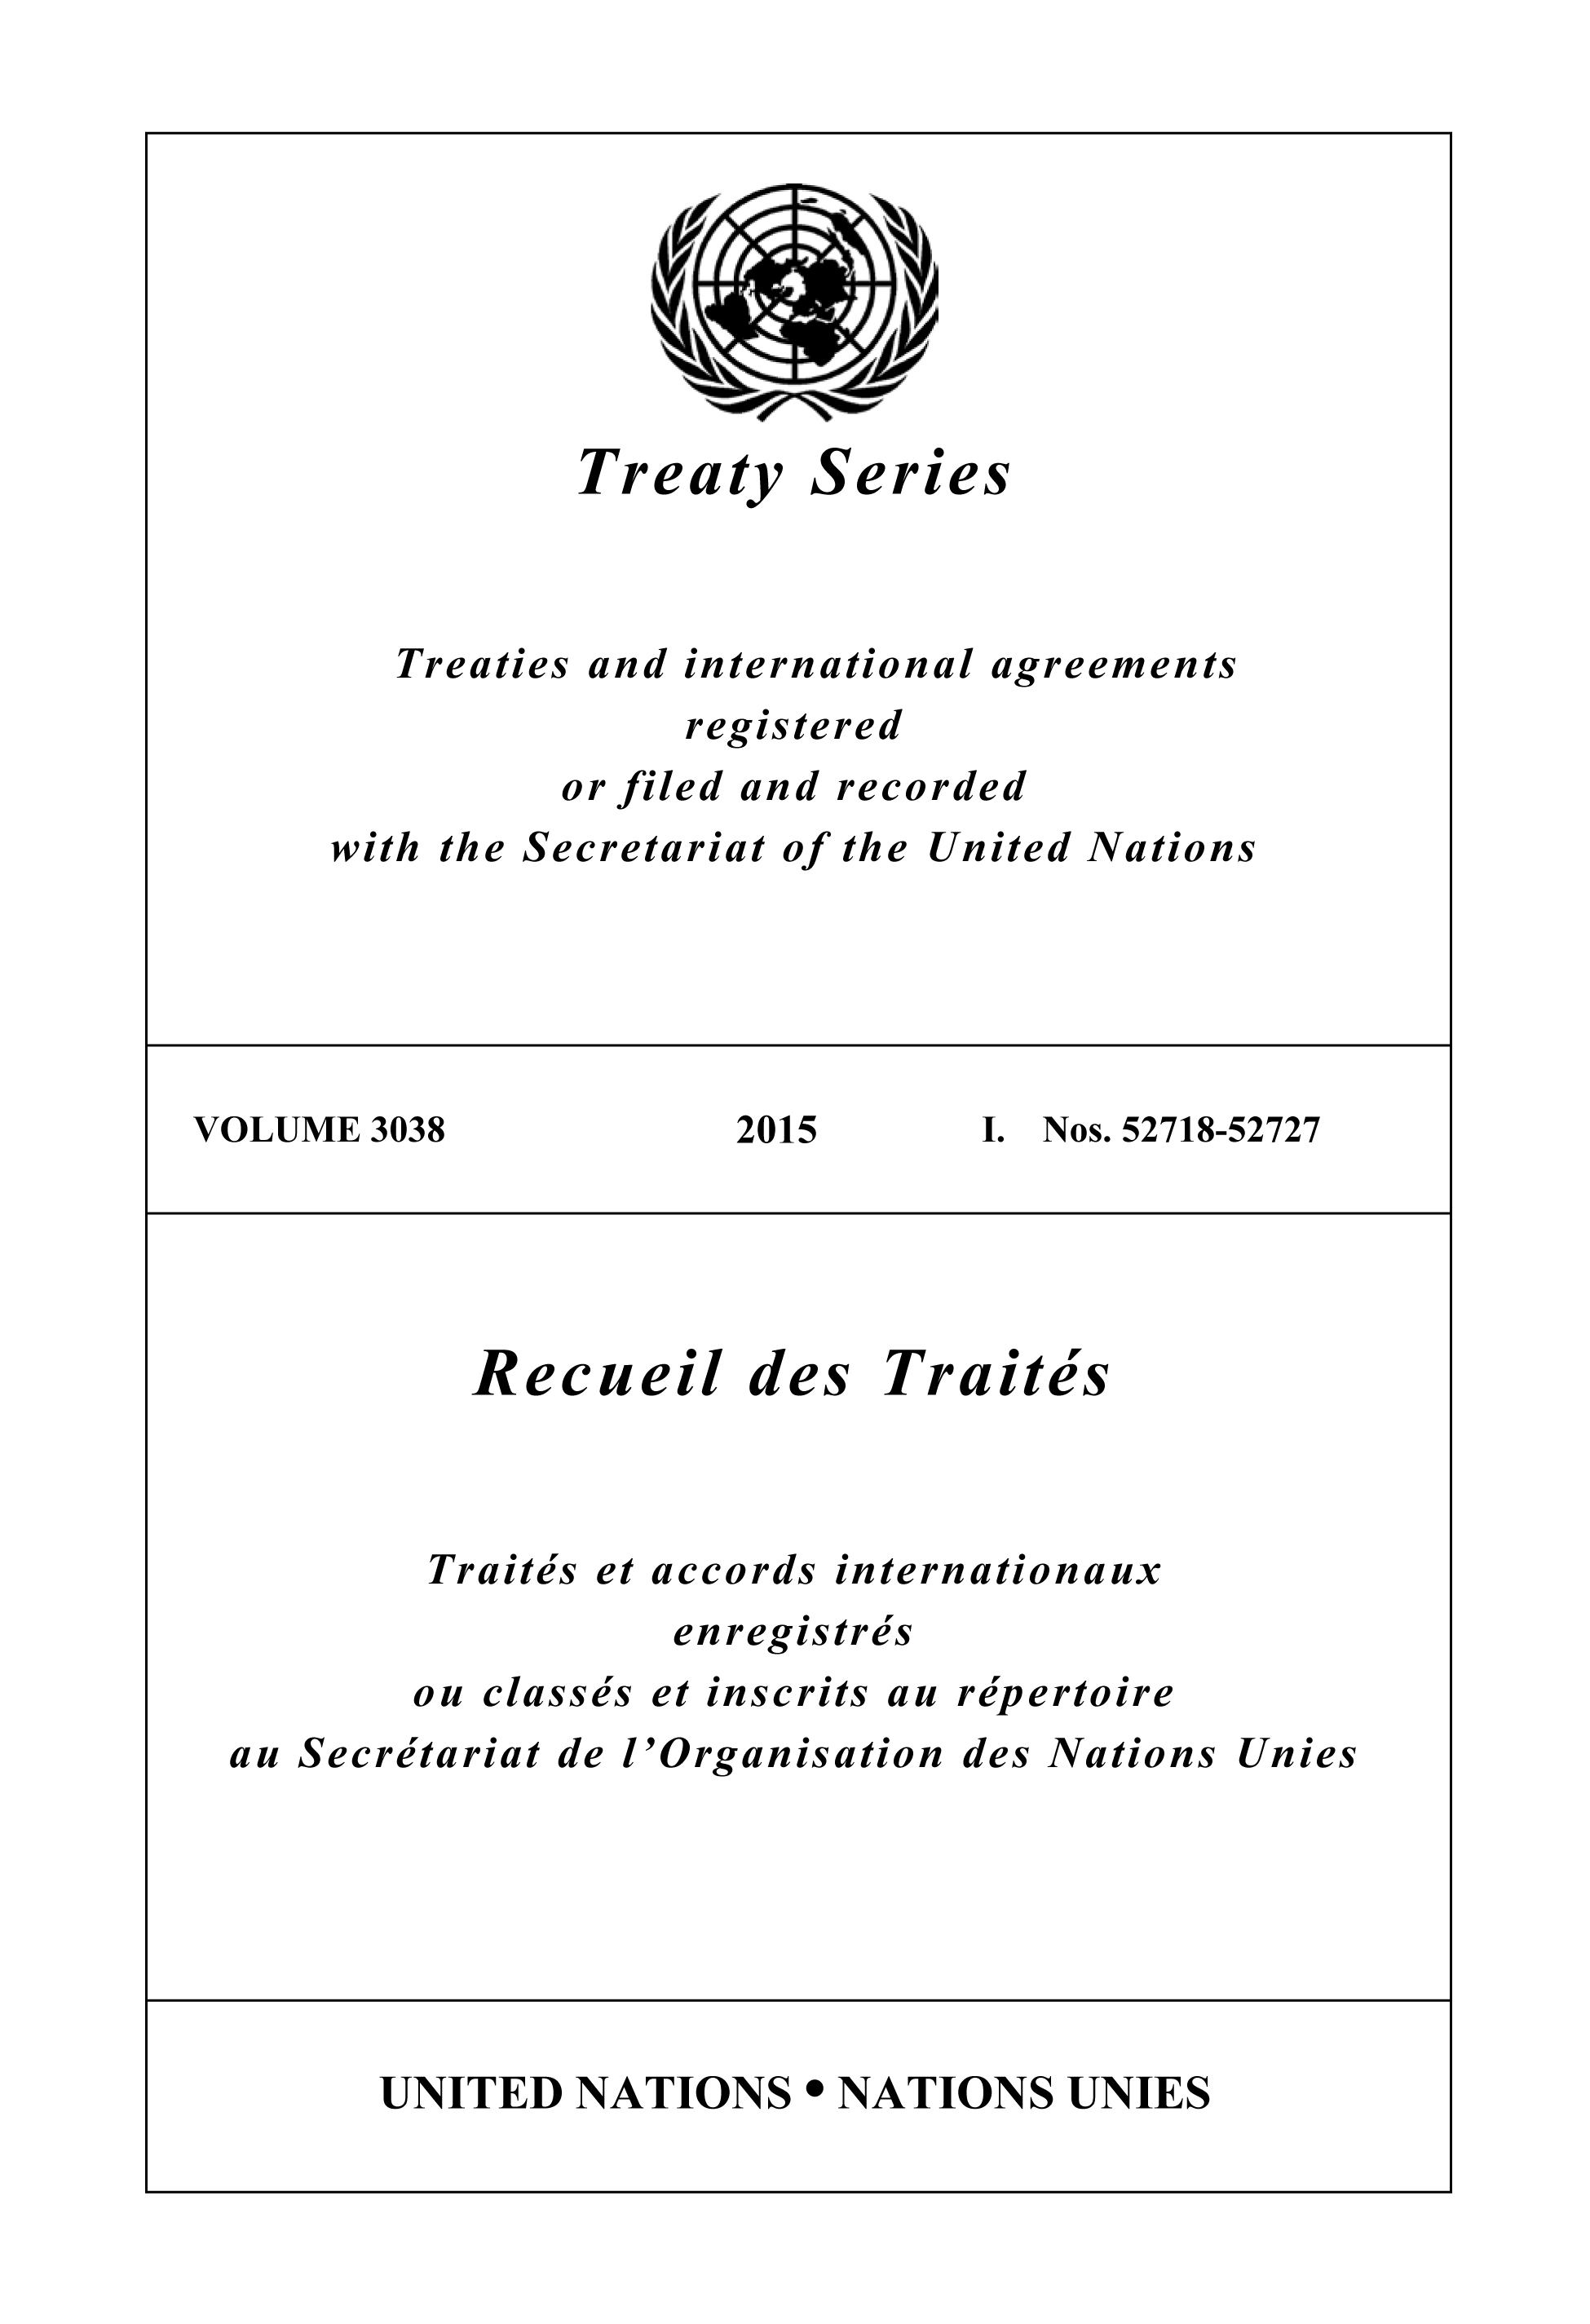 image of Treaty Series 3038